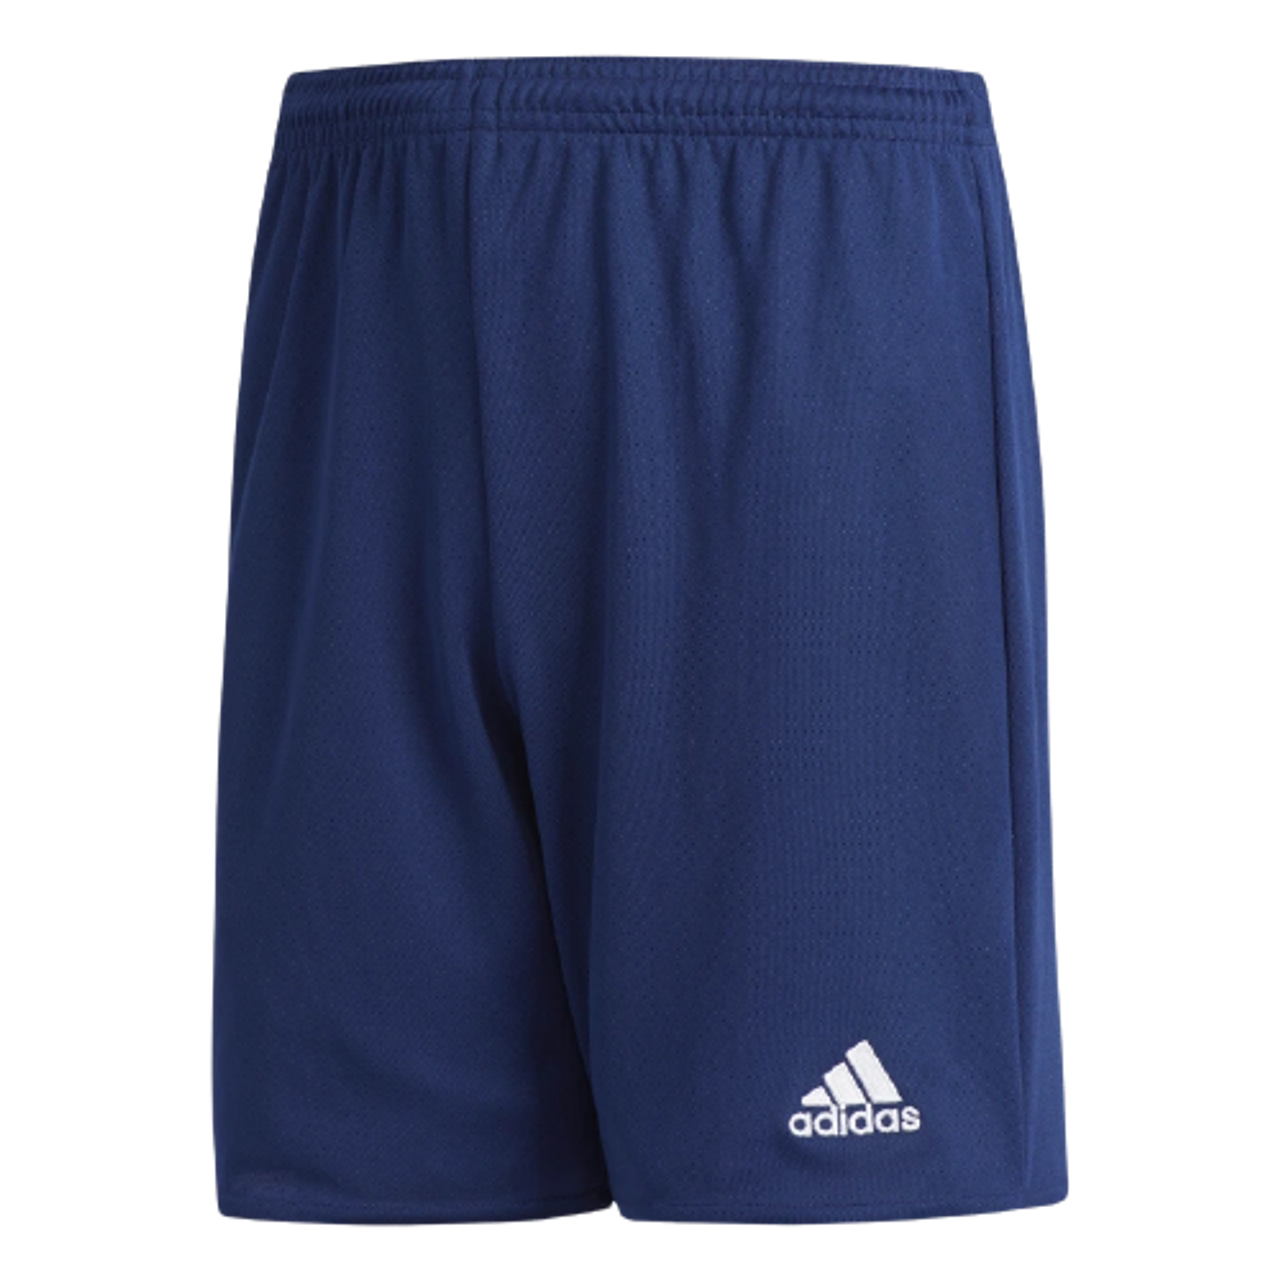 Buy Navy Blue Football Sports Shorts (3-16yrs) from Next USA